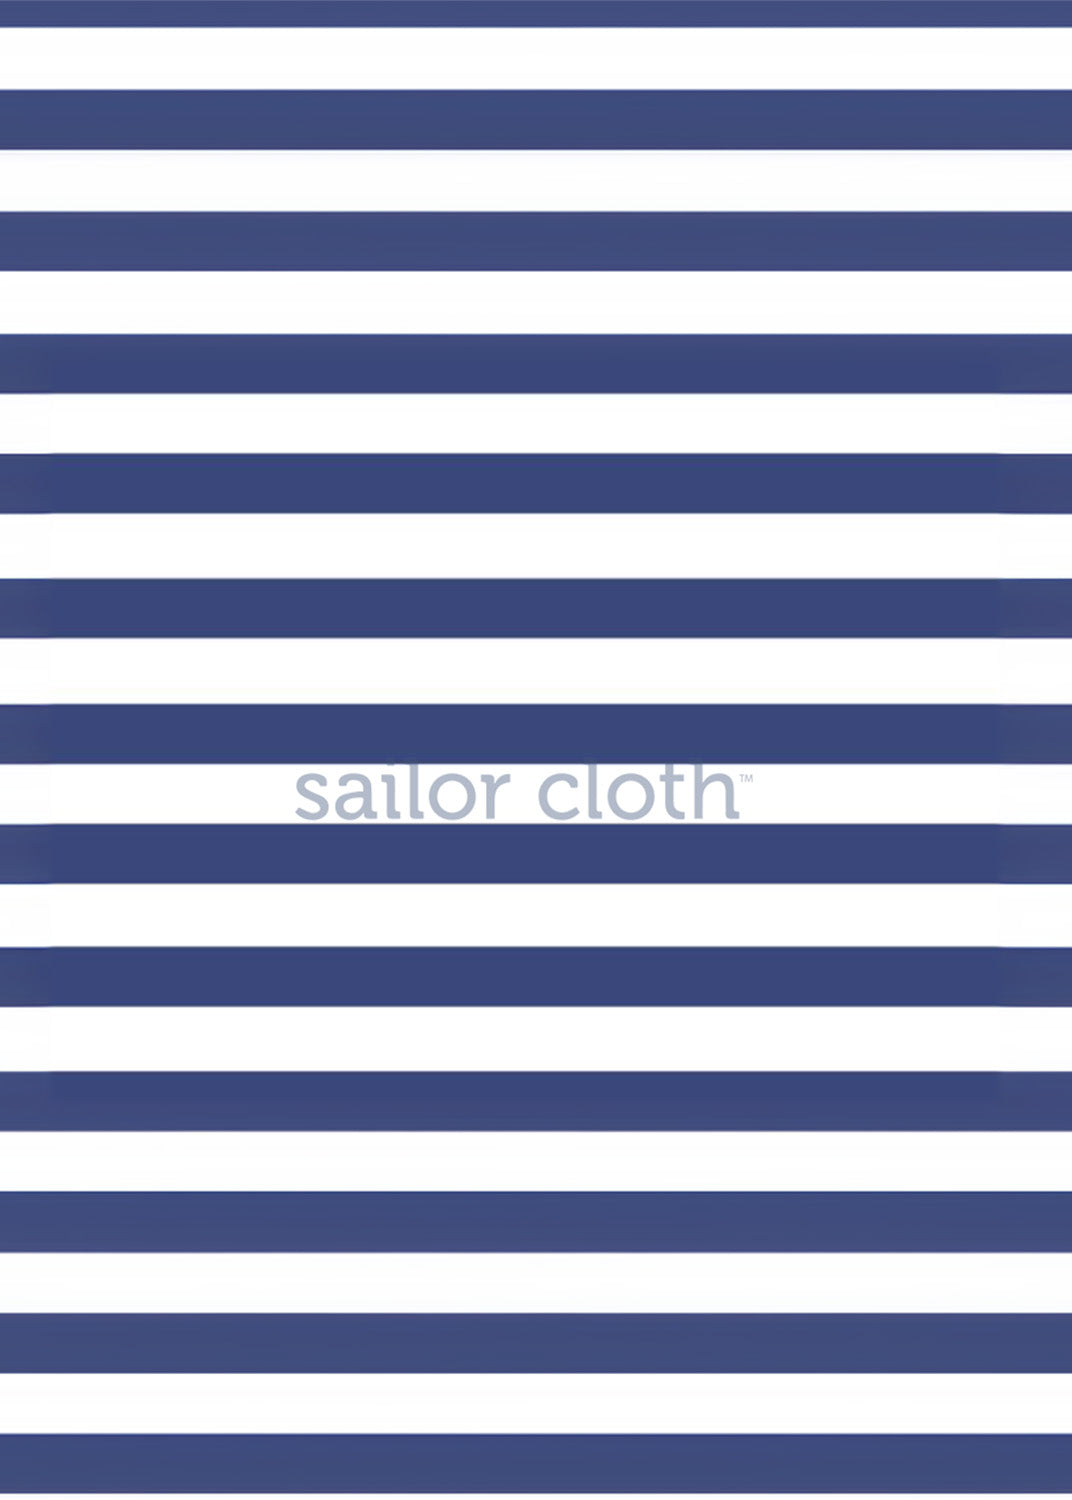 Boardwalk Dress - Stripe Navy/White